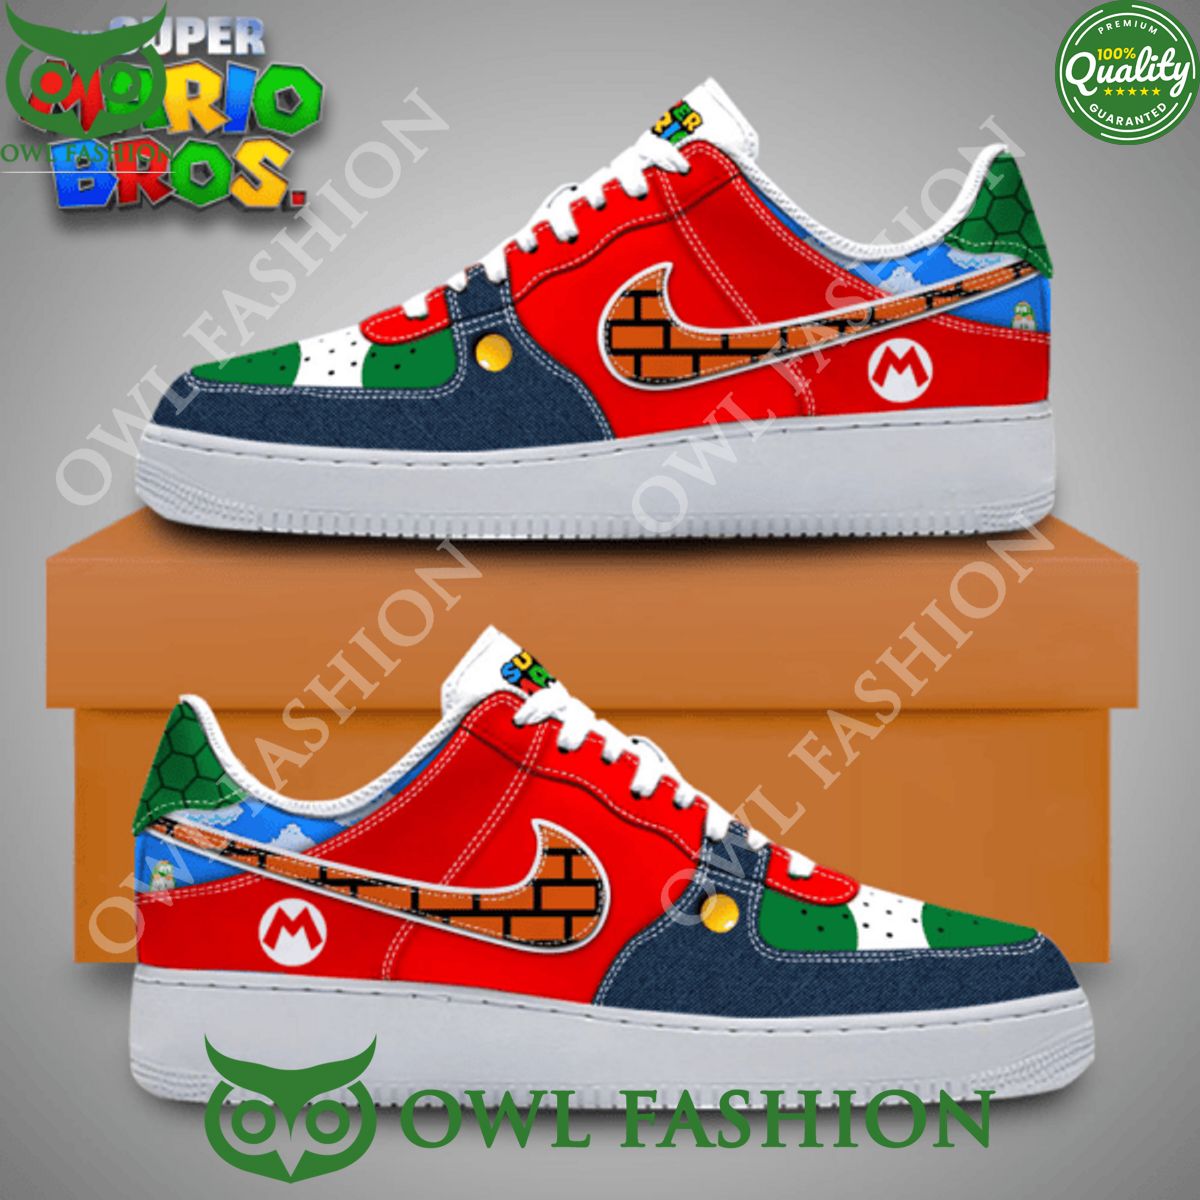 The Super Mario Bros Brick Nike Air Force 1 Shoes